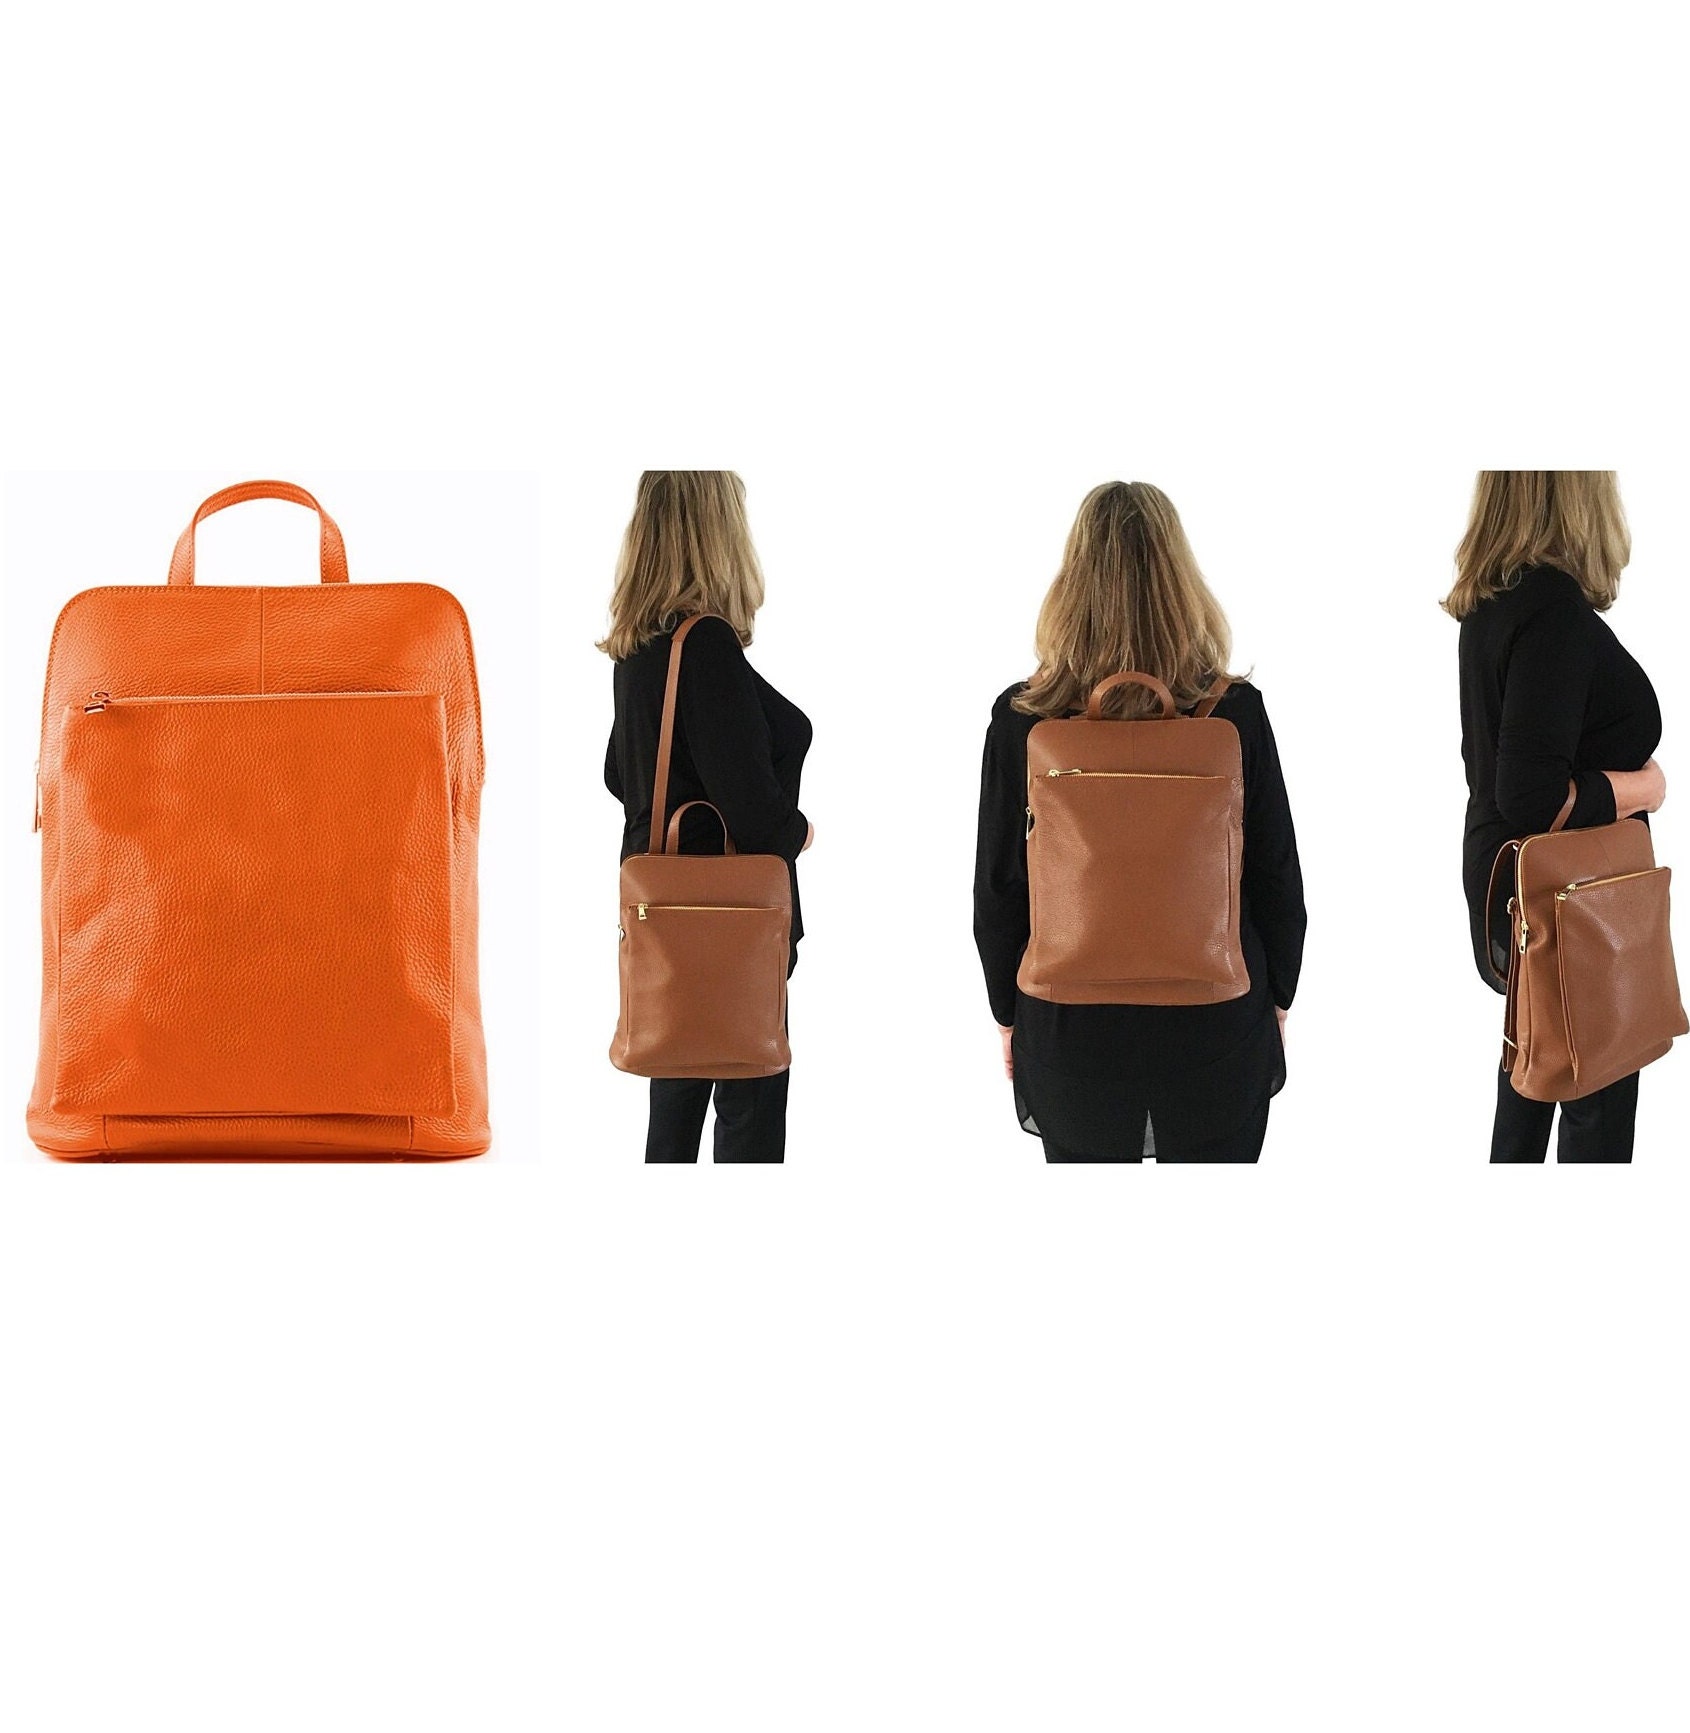 Italian Leather 'Vera Pelle' Handbag, Converts to Backpack